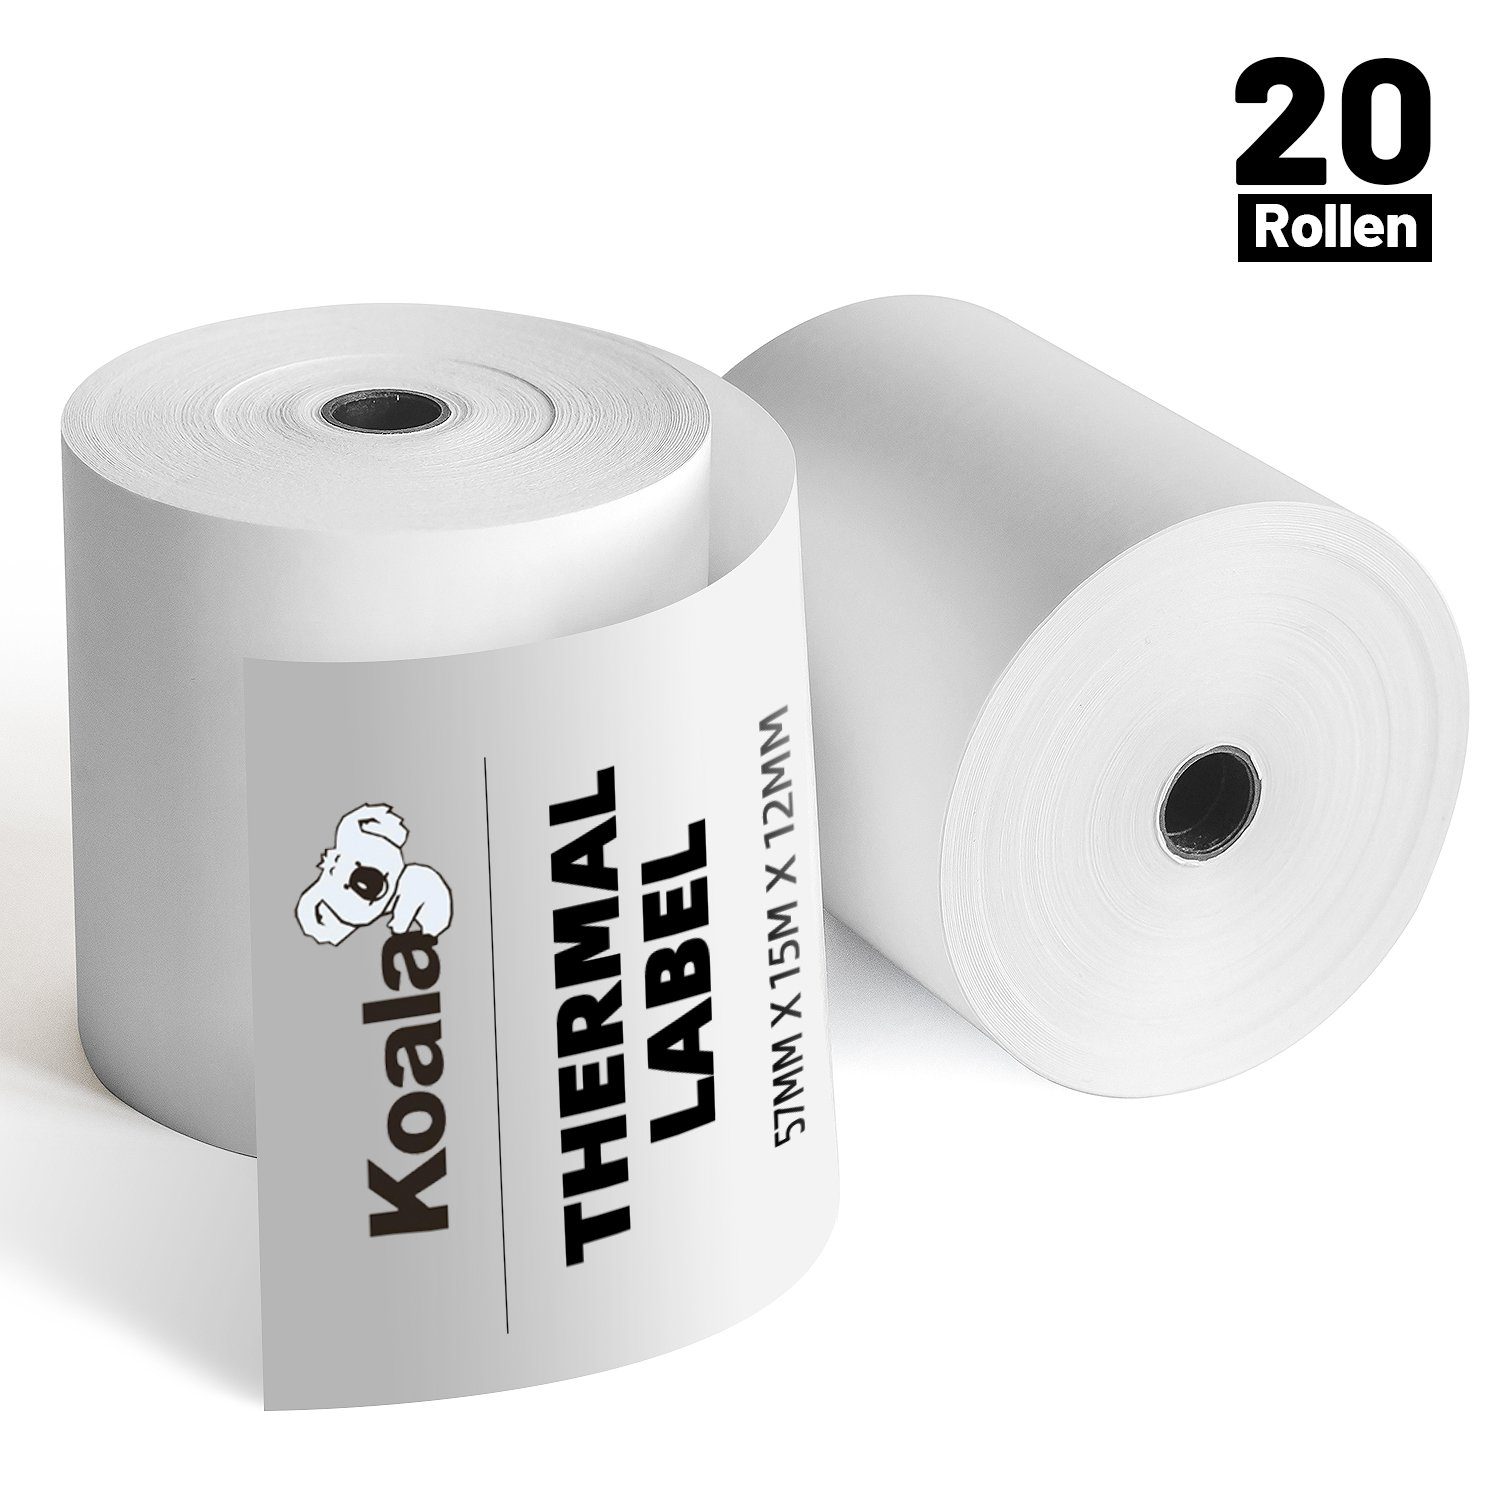 mm 57 Bonrolle Drucker 15 Koala Rollen Thermopapier 20 Etikettenpapier für Kassen, x